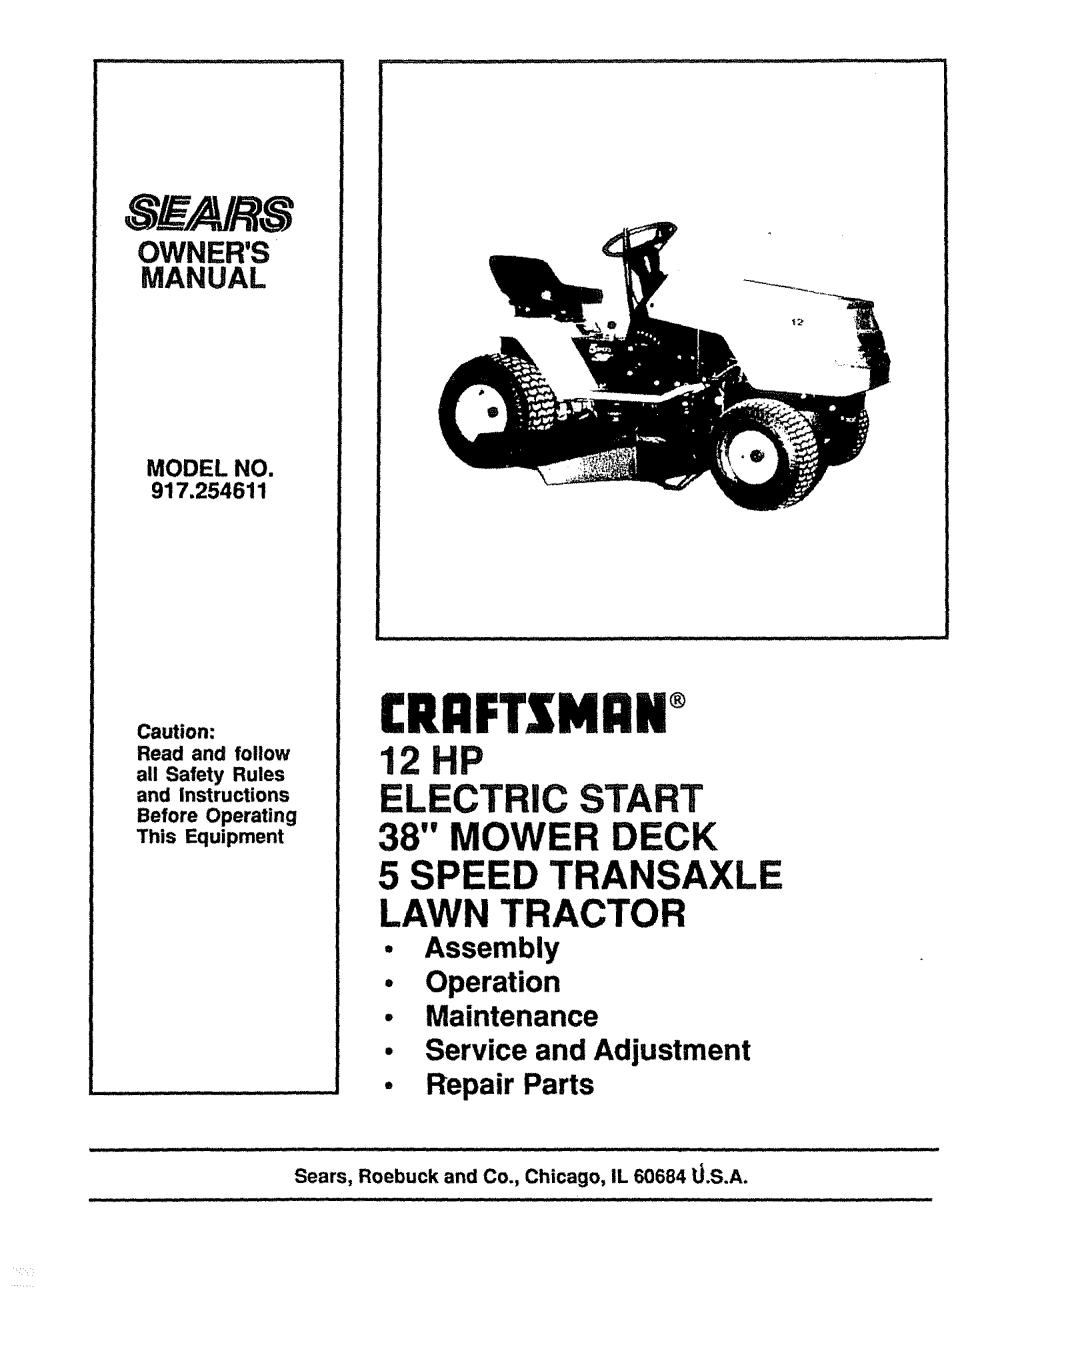 Craftsman 917.254611 owner manual Rrftxmrn, 12 HP, Speed Transaxle, LECTRIC STA T 38 MOWER DECK, Lawn Tractor, Model No 